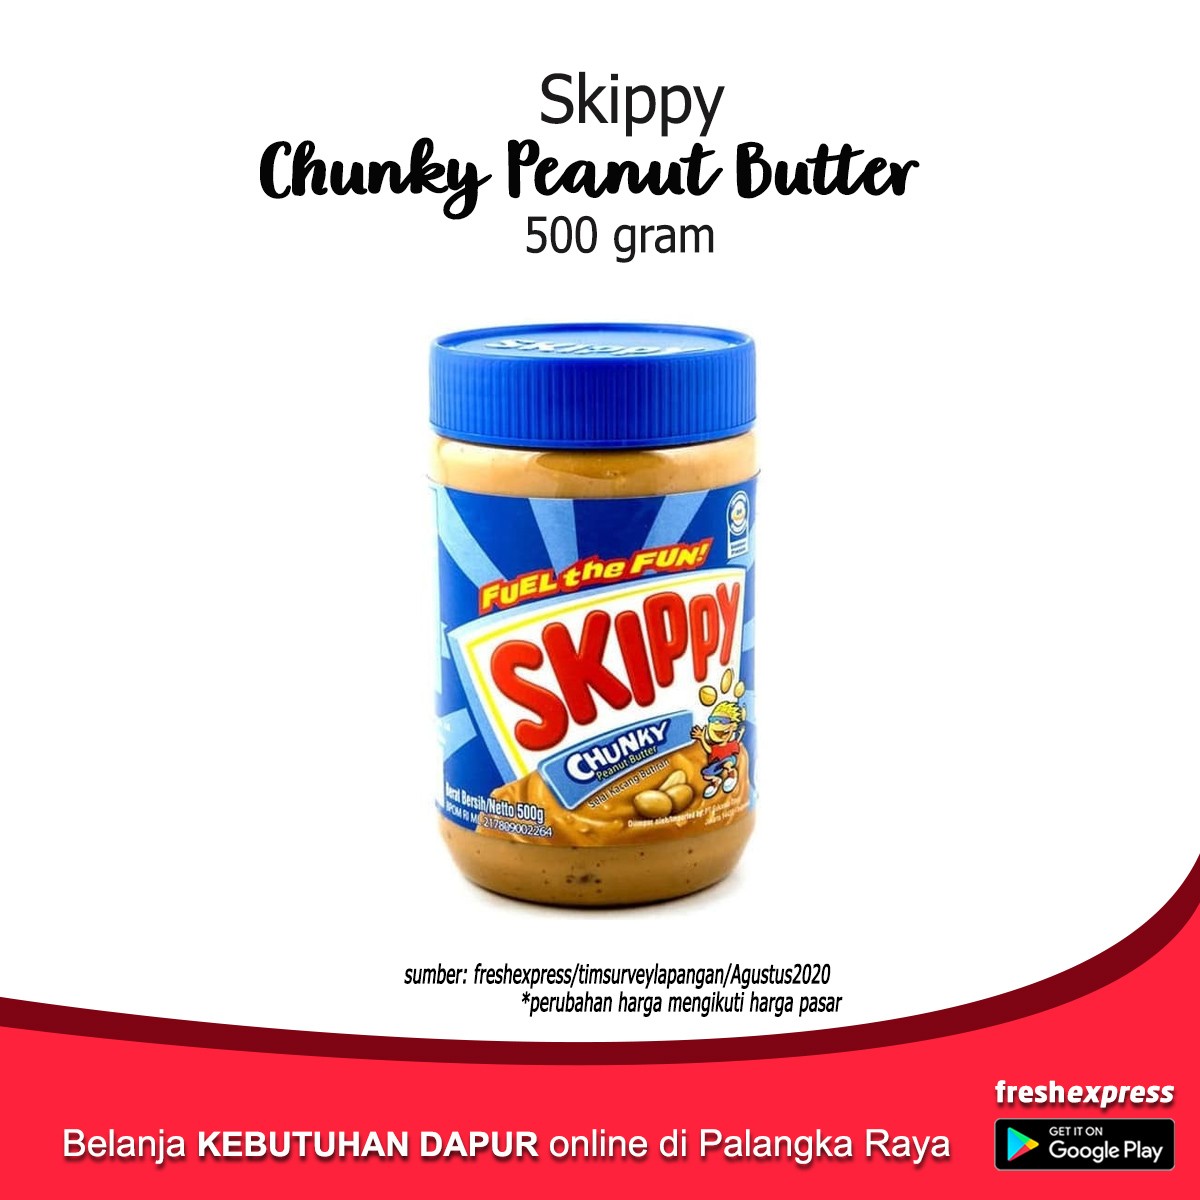 Skippy Chunky Peanut Butter 500 Gram